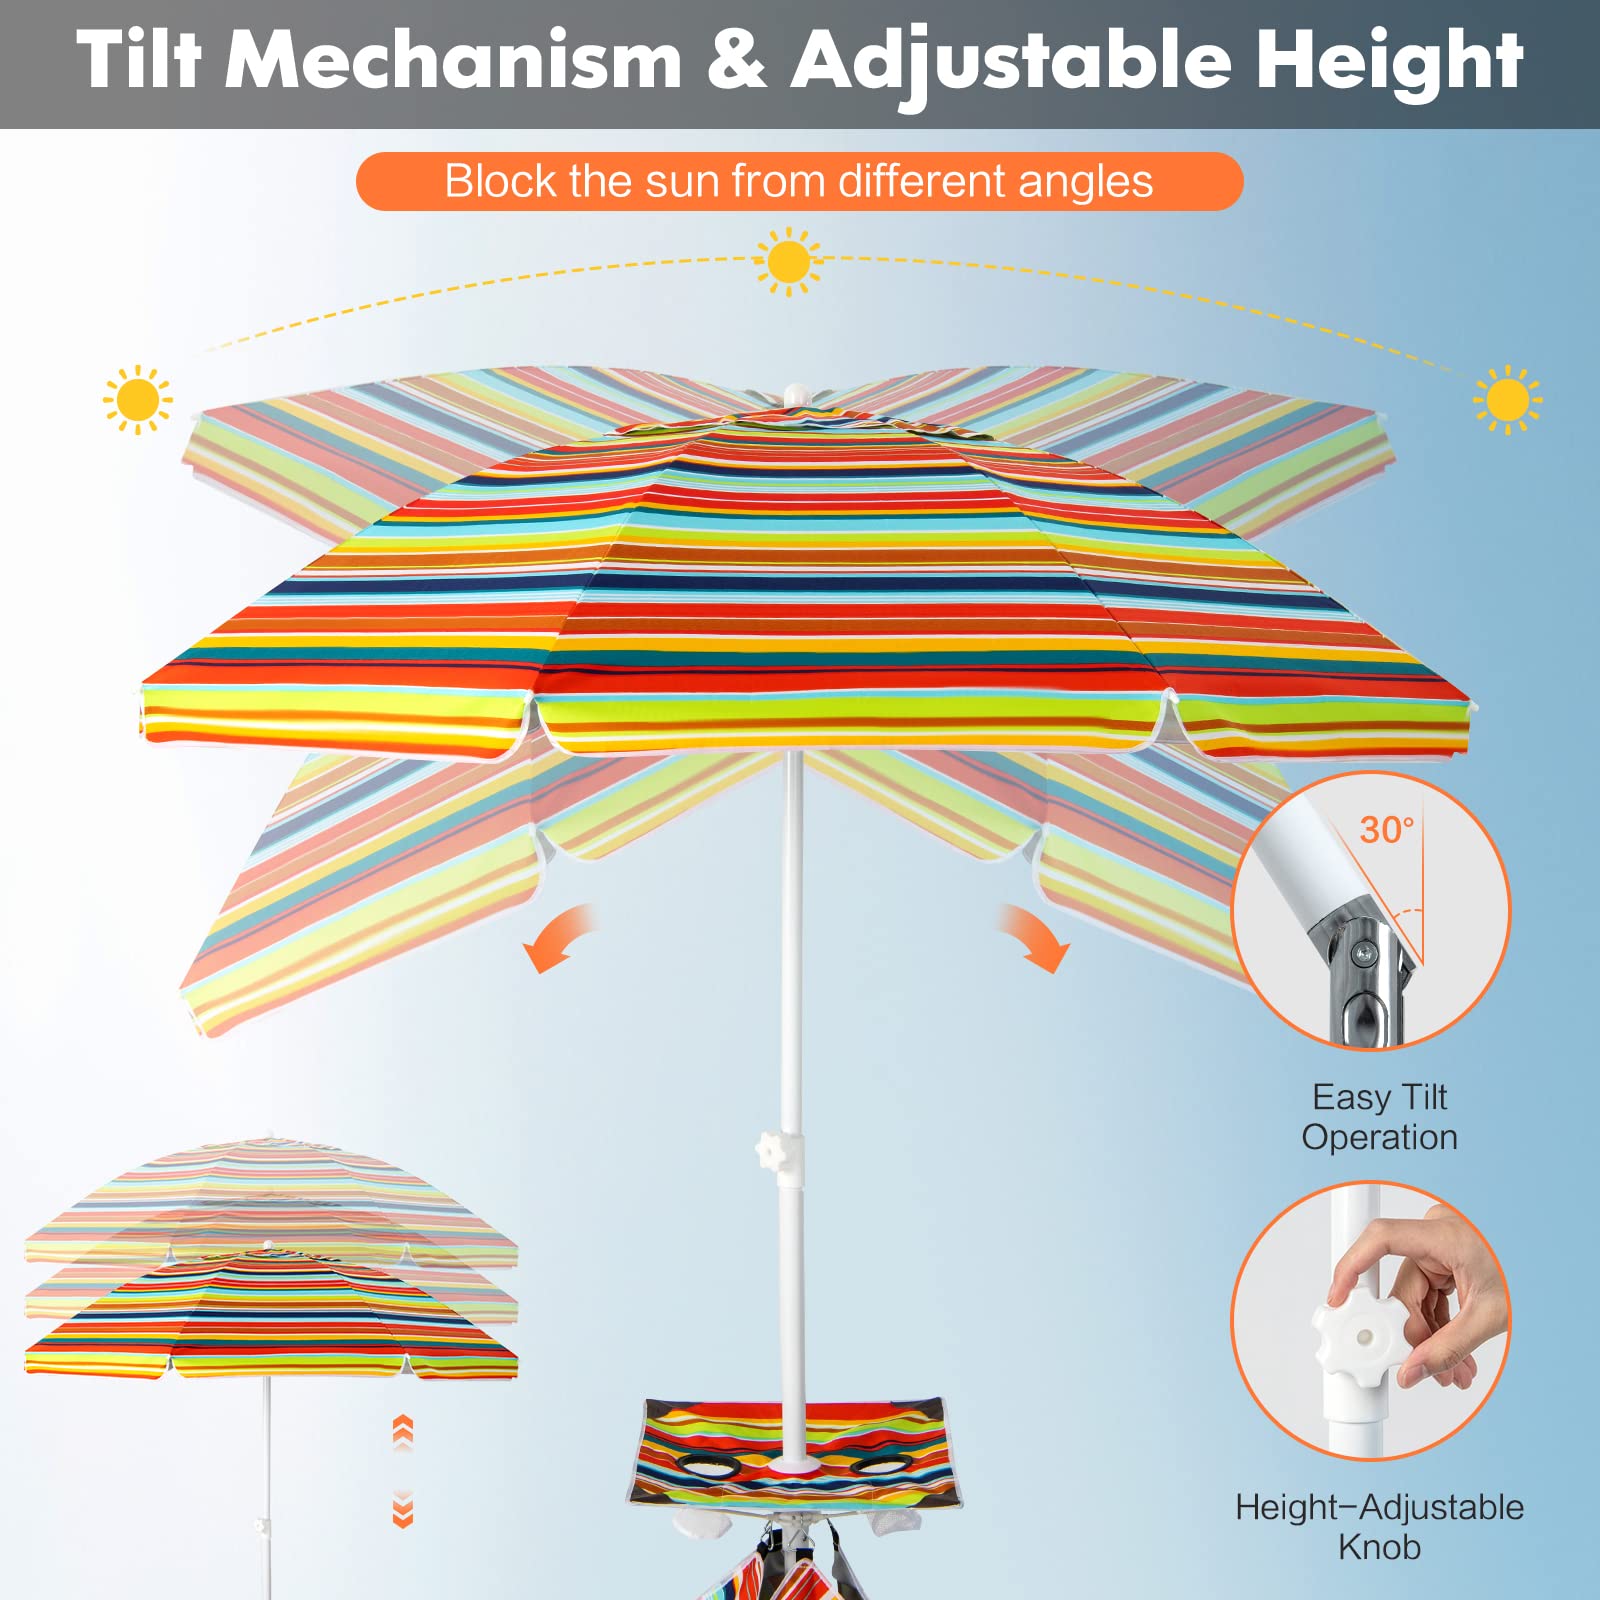 Giantex Beach Umbrella with Cup Holder Table and Sandbag